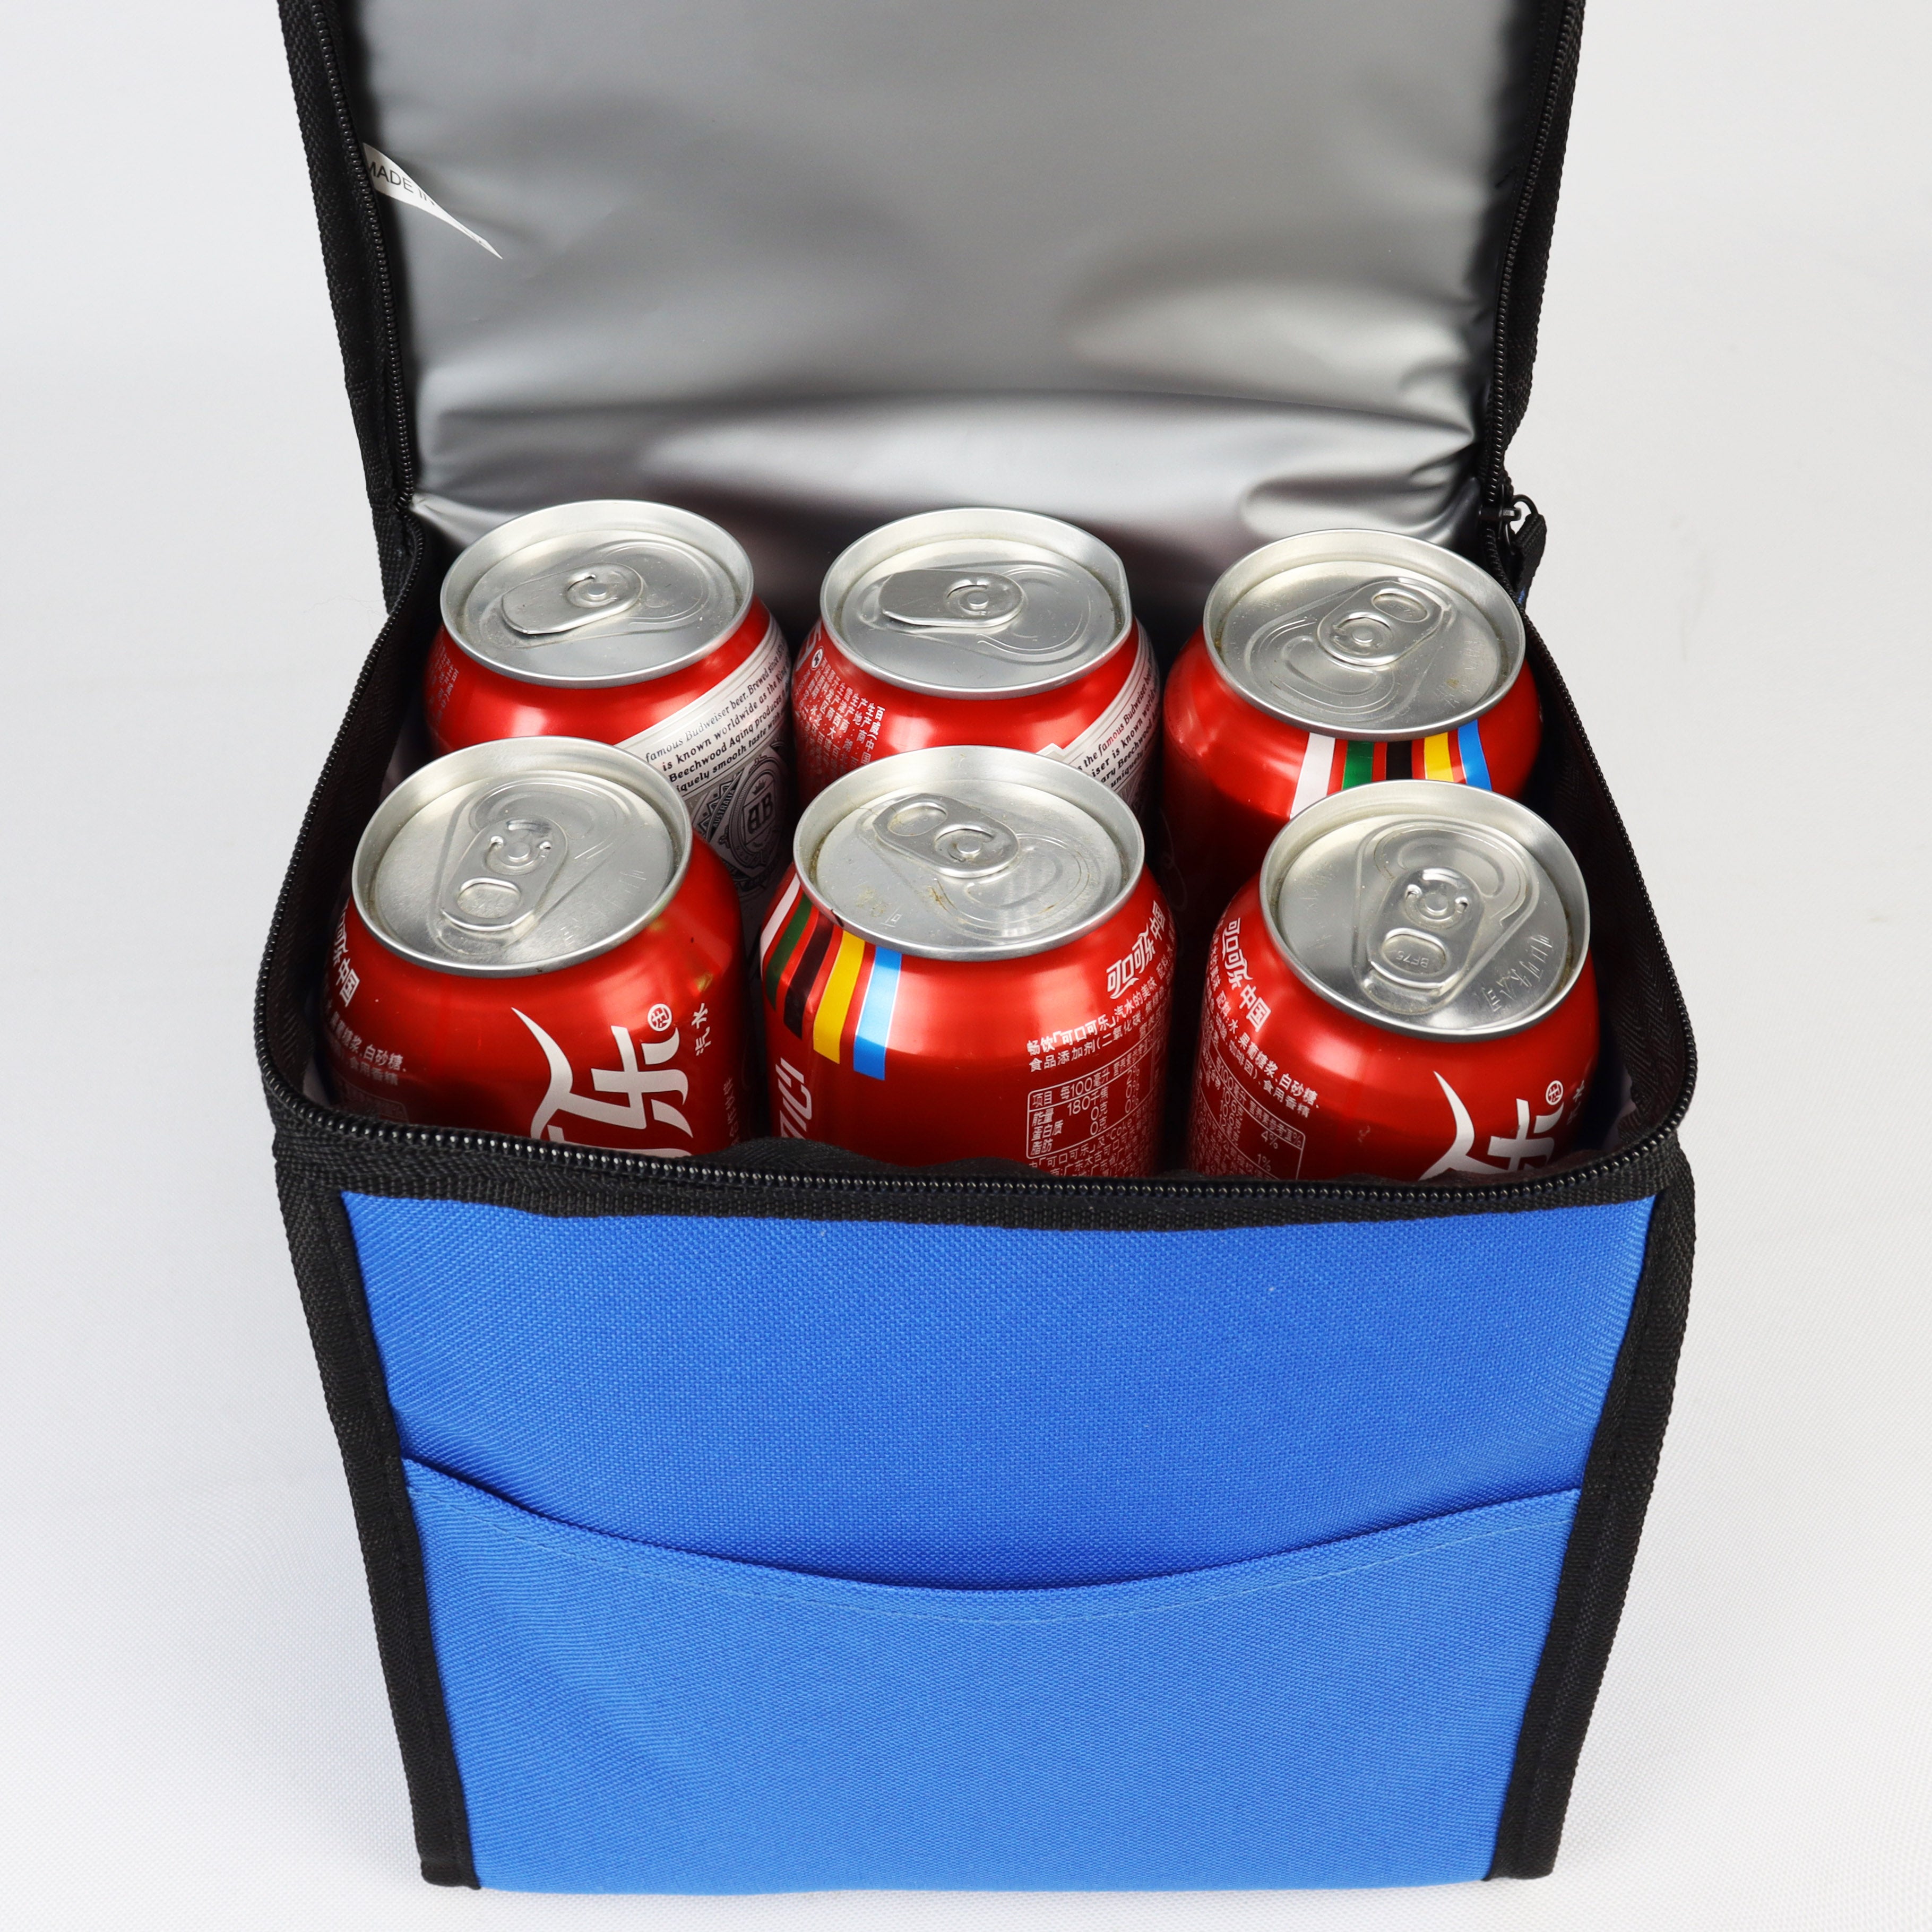 LS-ACB609 - Lunch Cooler Bag